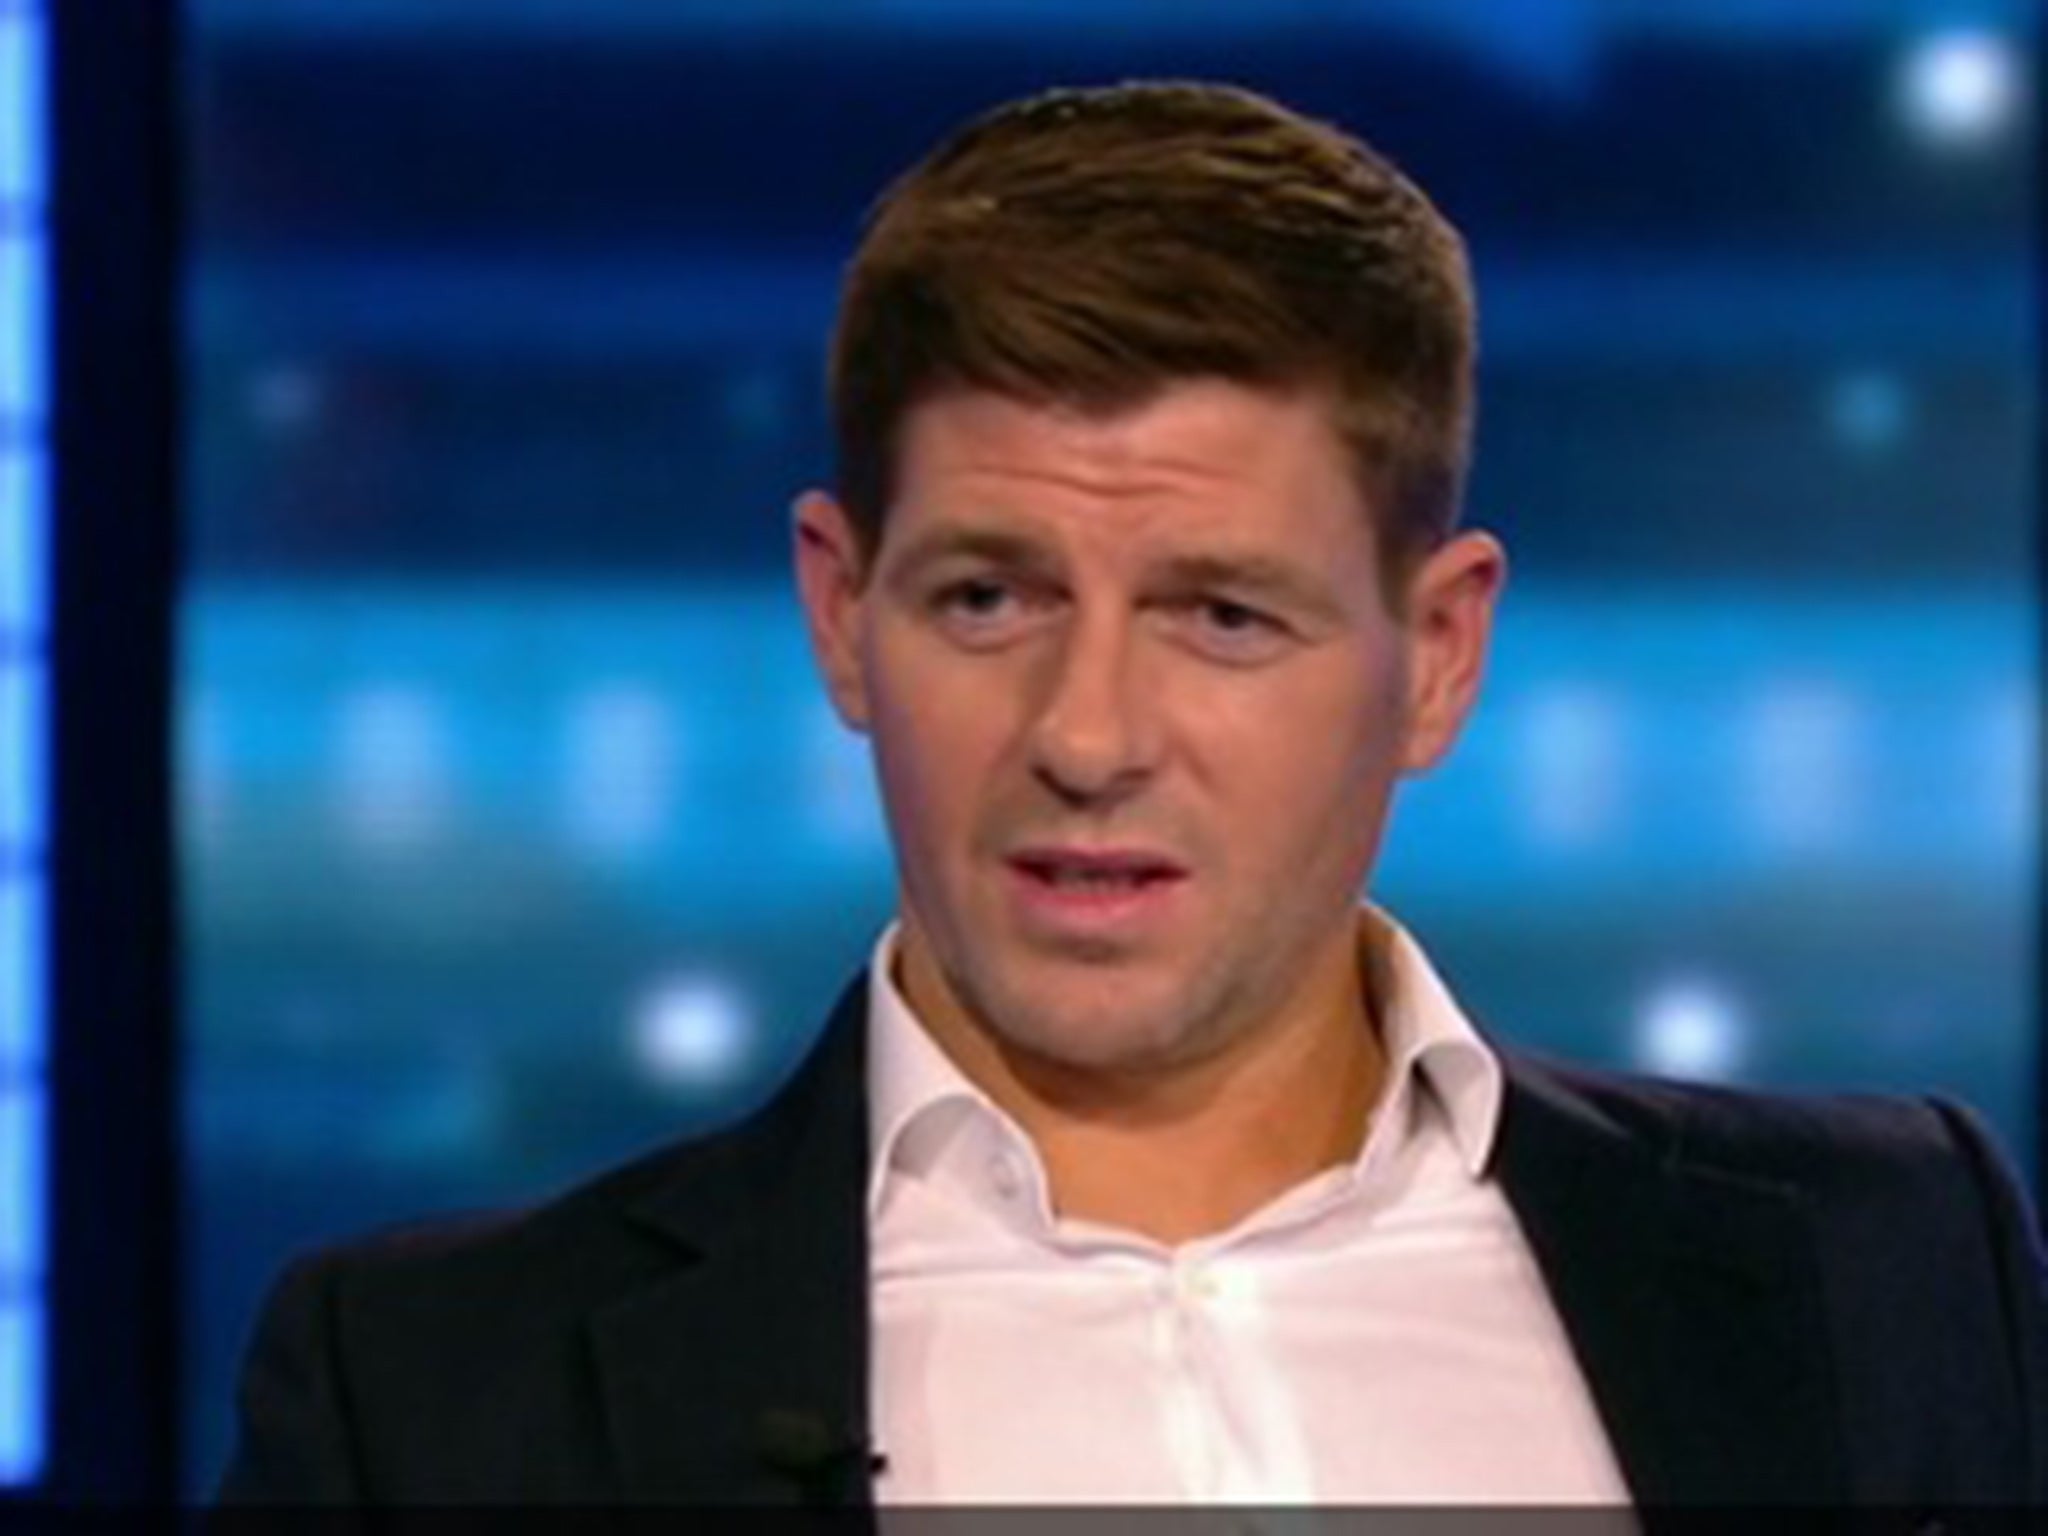 Steven Gerrard speaking on Bt Sport last night